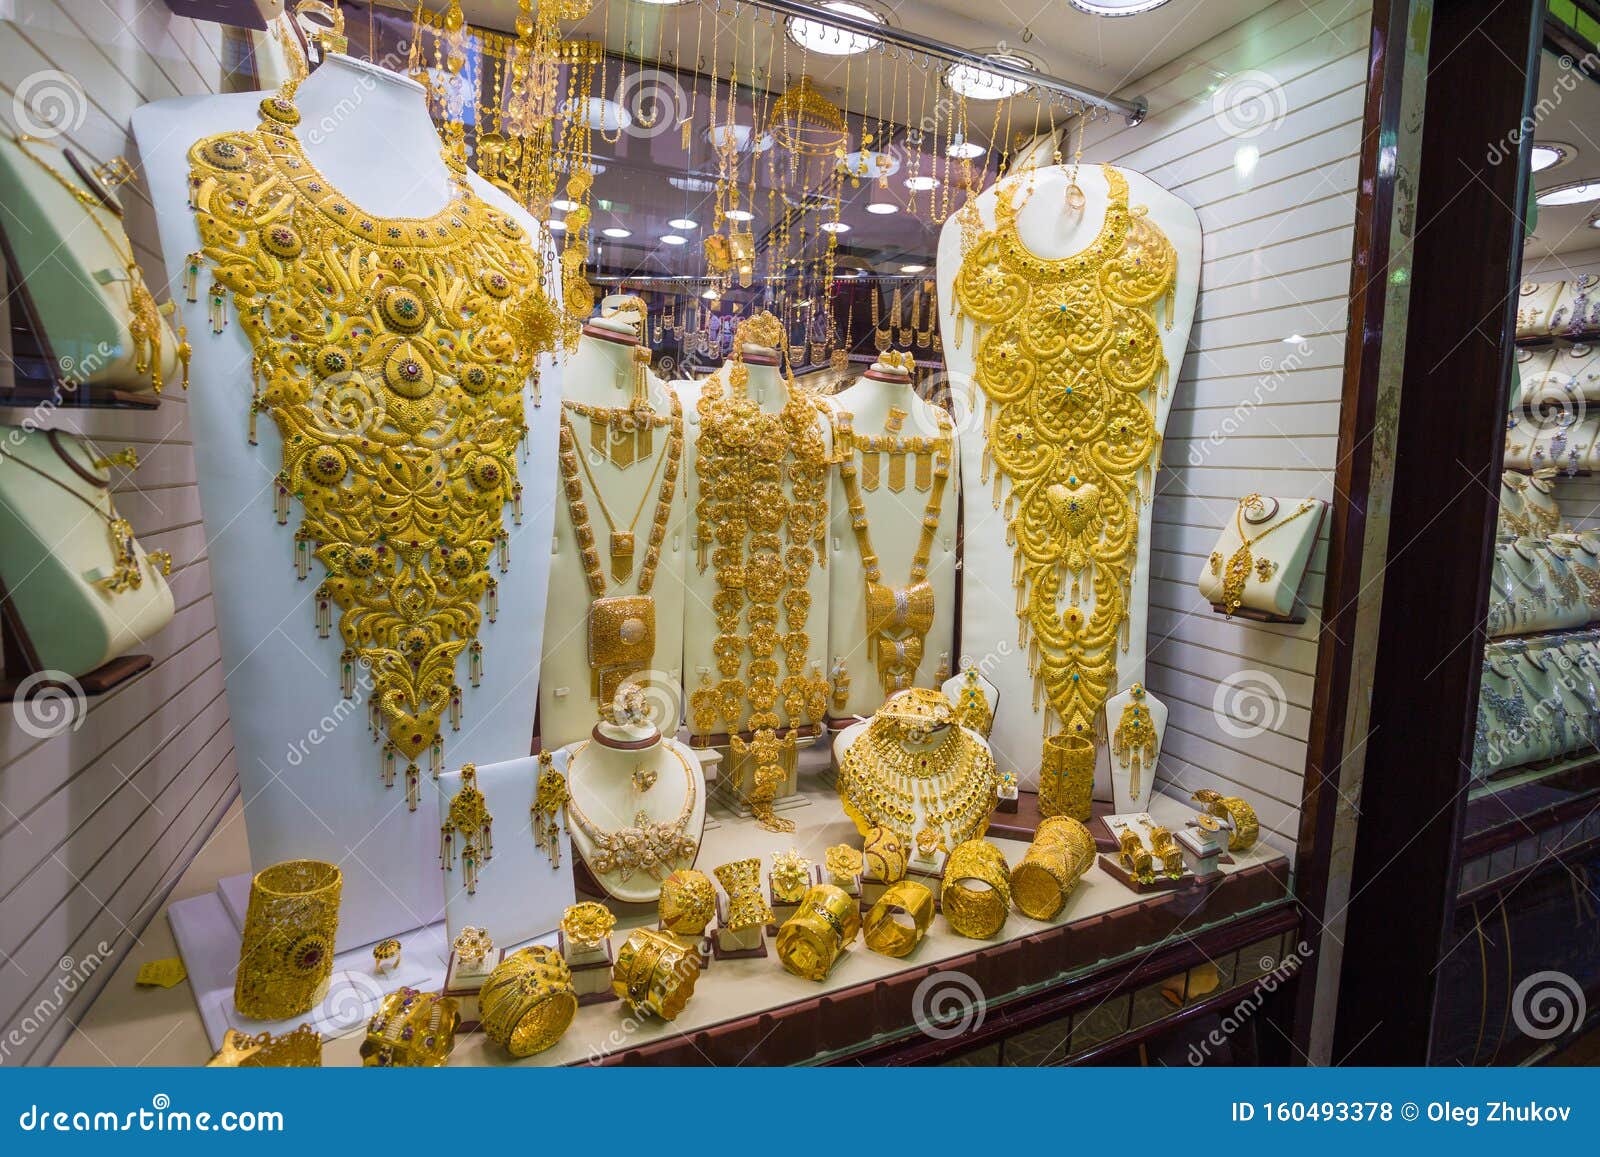 Gold market in Duba stock photo. Image of decoration - 160493378